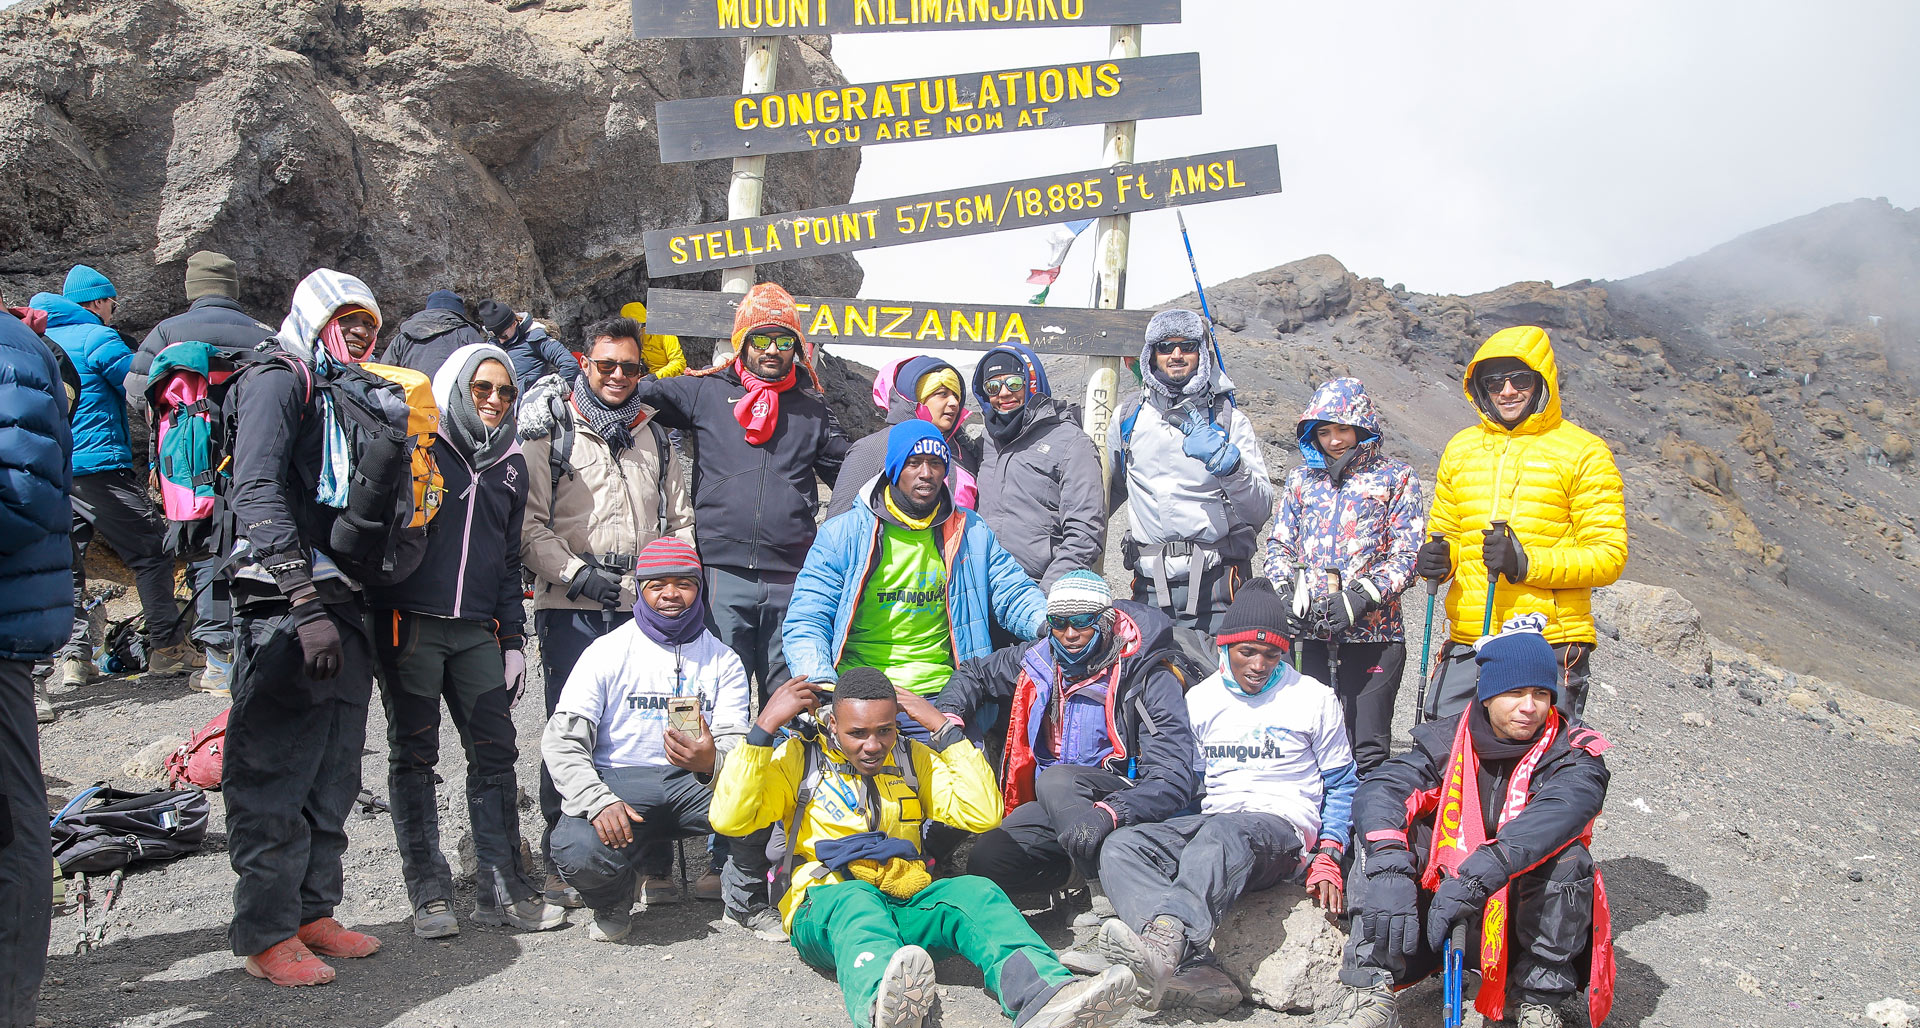 The Best Mount Kilimanjaro Company